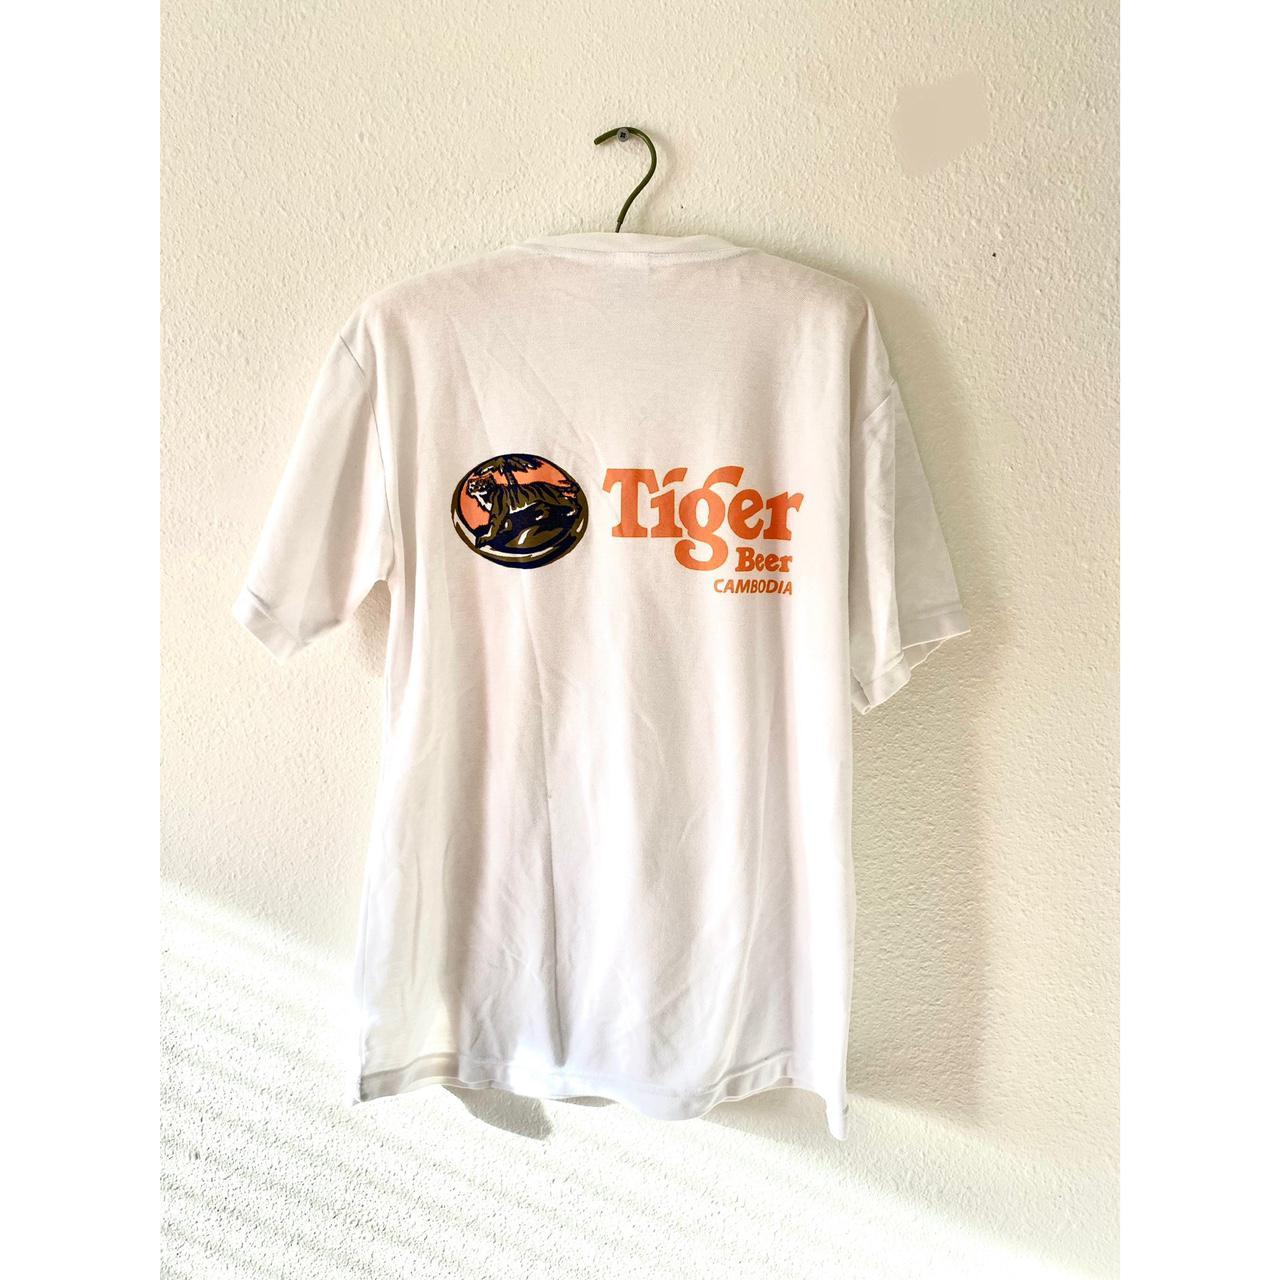 Tiger Beer Vintage Distressed Style T-Shirt